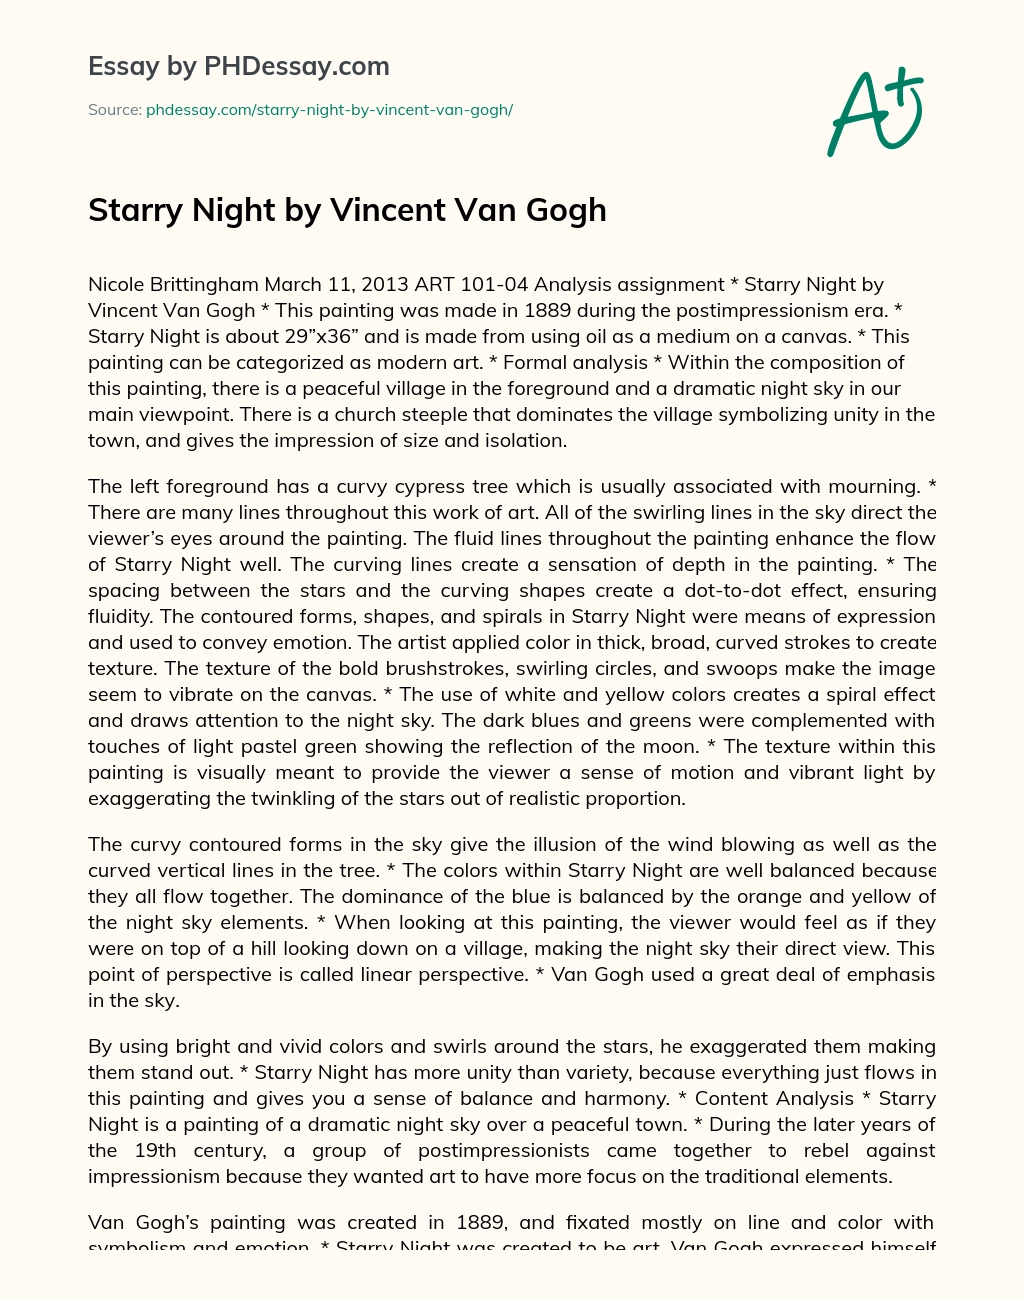 Starry Night by Vincent Van Gogh essay